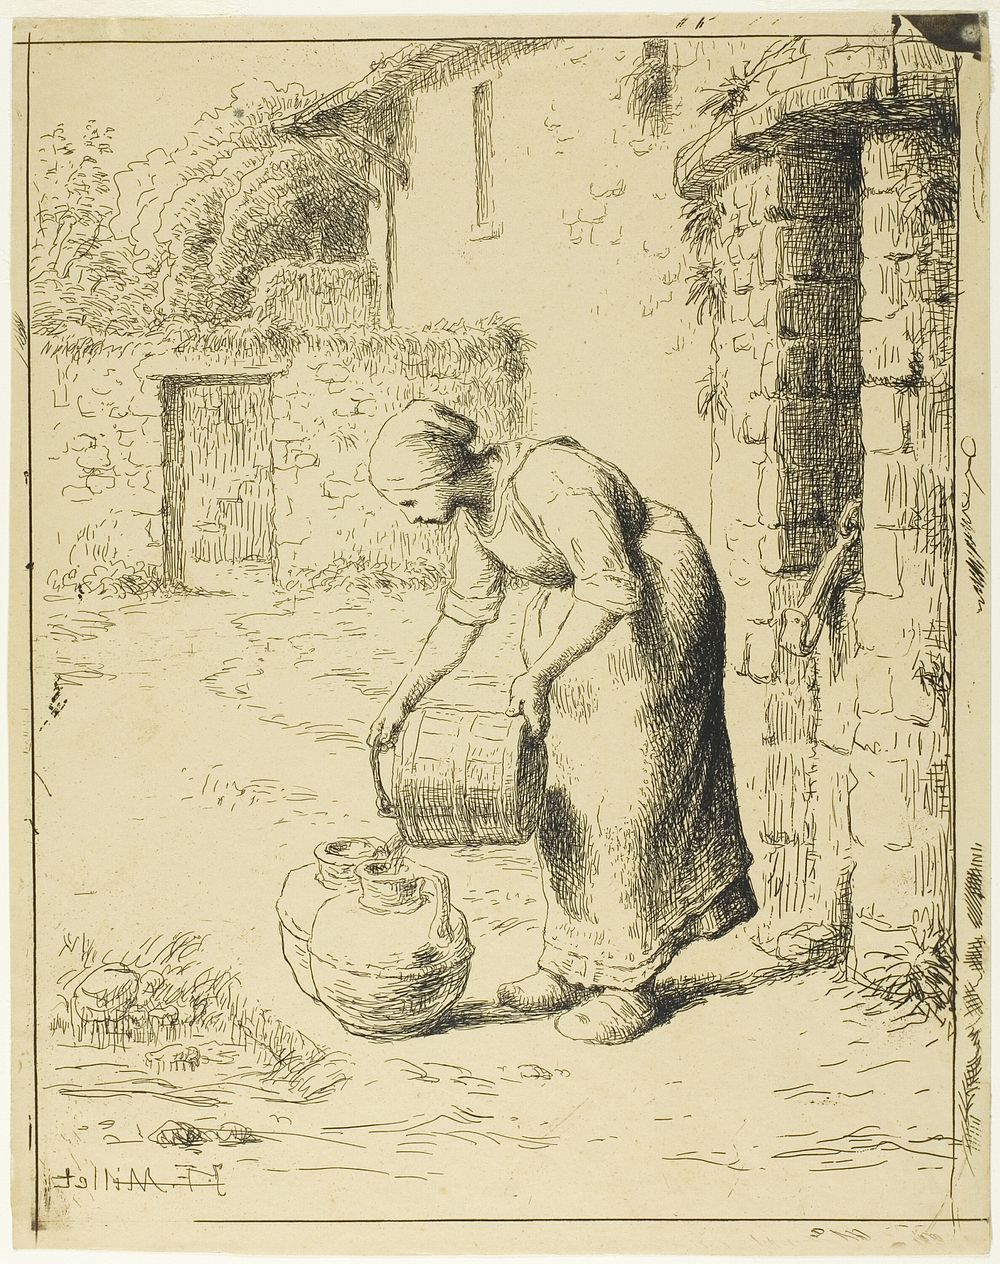 Woman Emptying a Pail by Jean François Millet